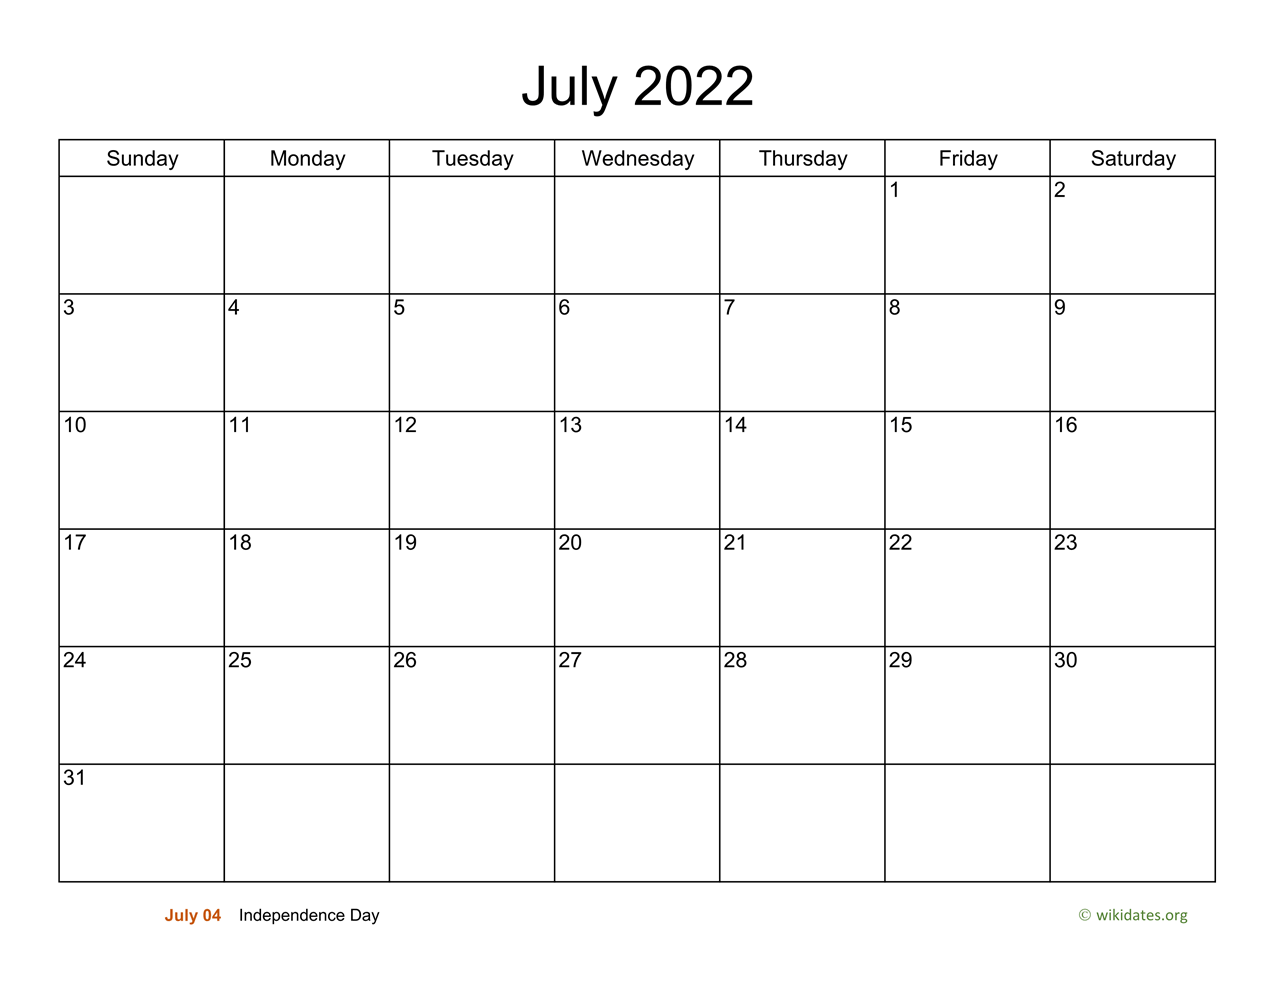 Monthly Calendar July 2022 Basic Calendar For July 2022 | Wikidates.org